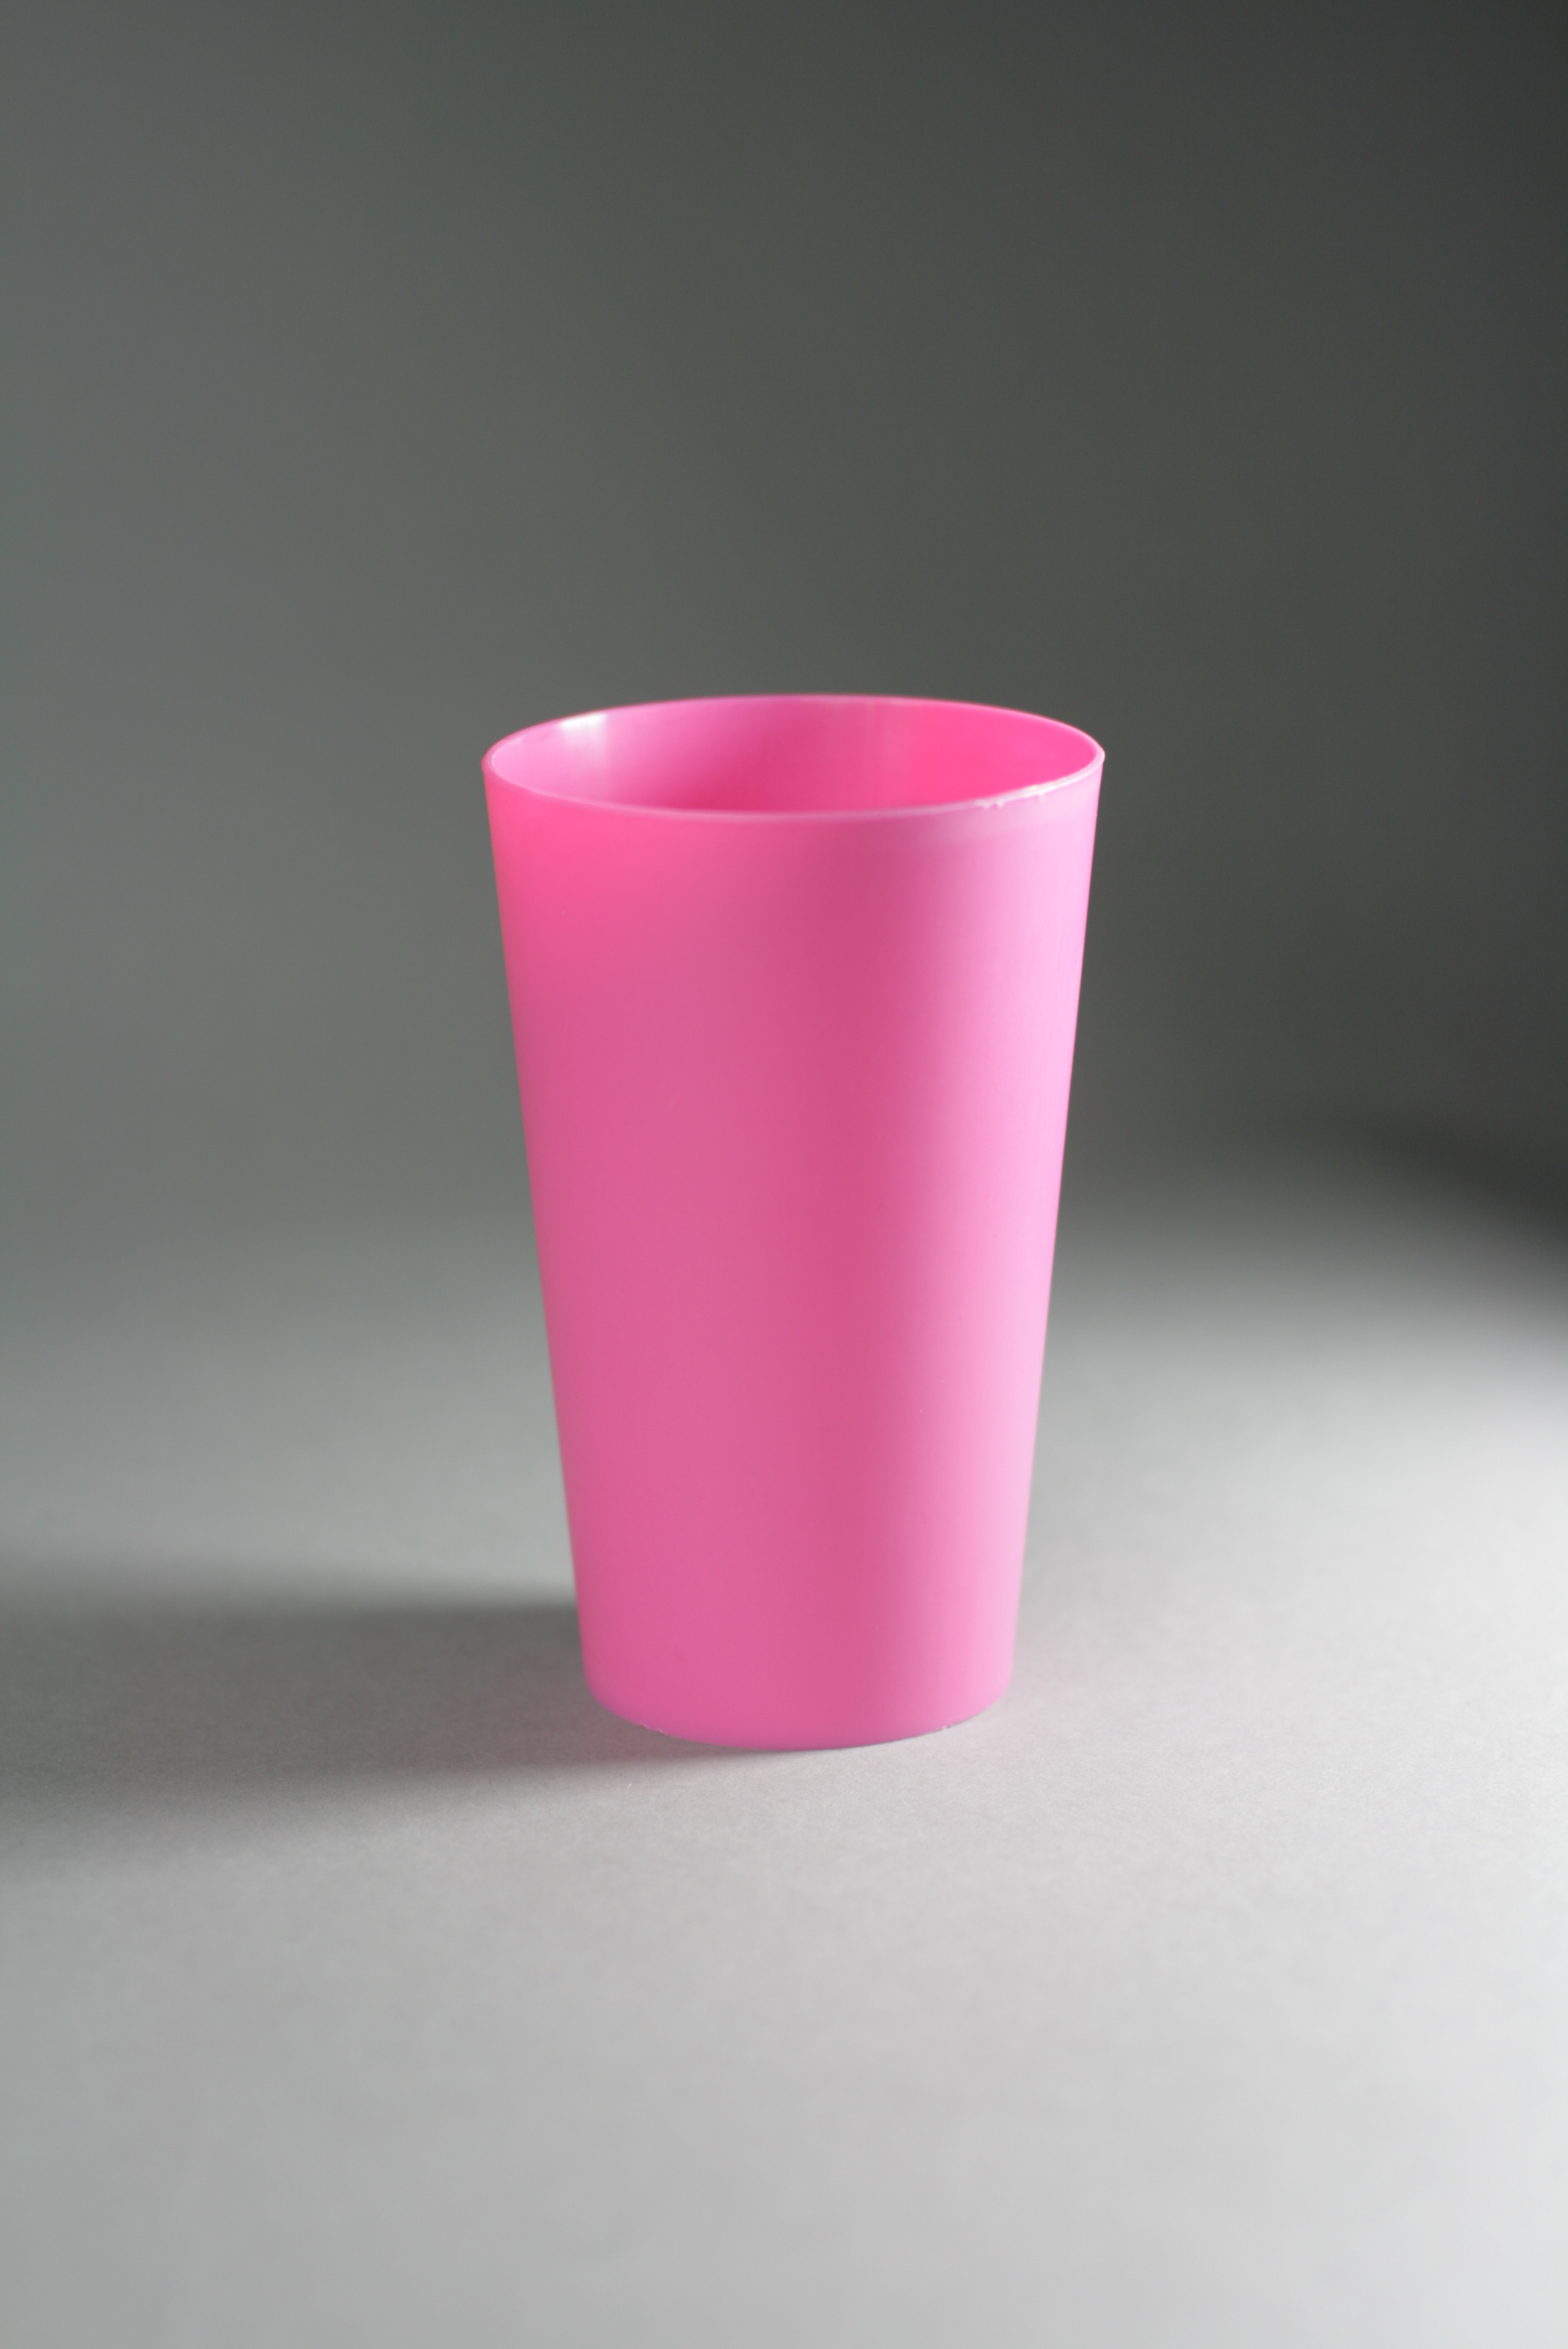 Gobelet Plastique Rose Pastel 20cl - 50